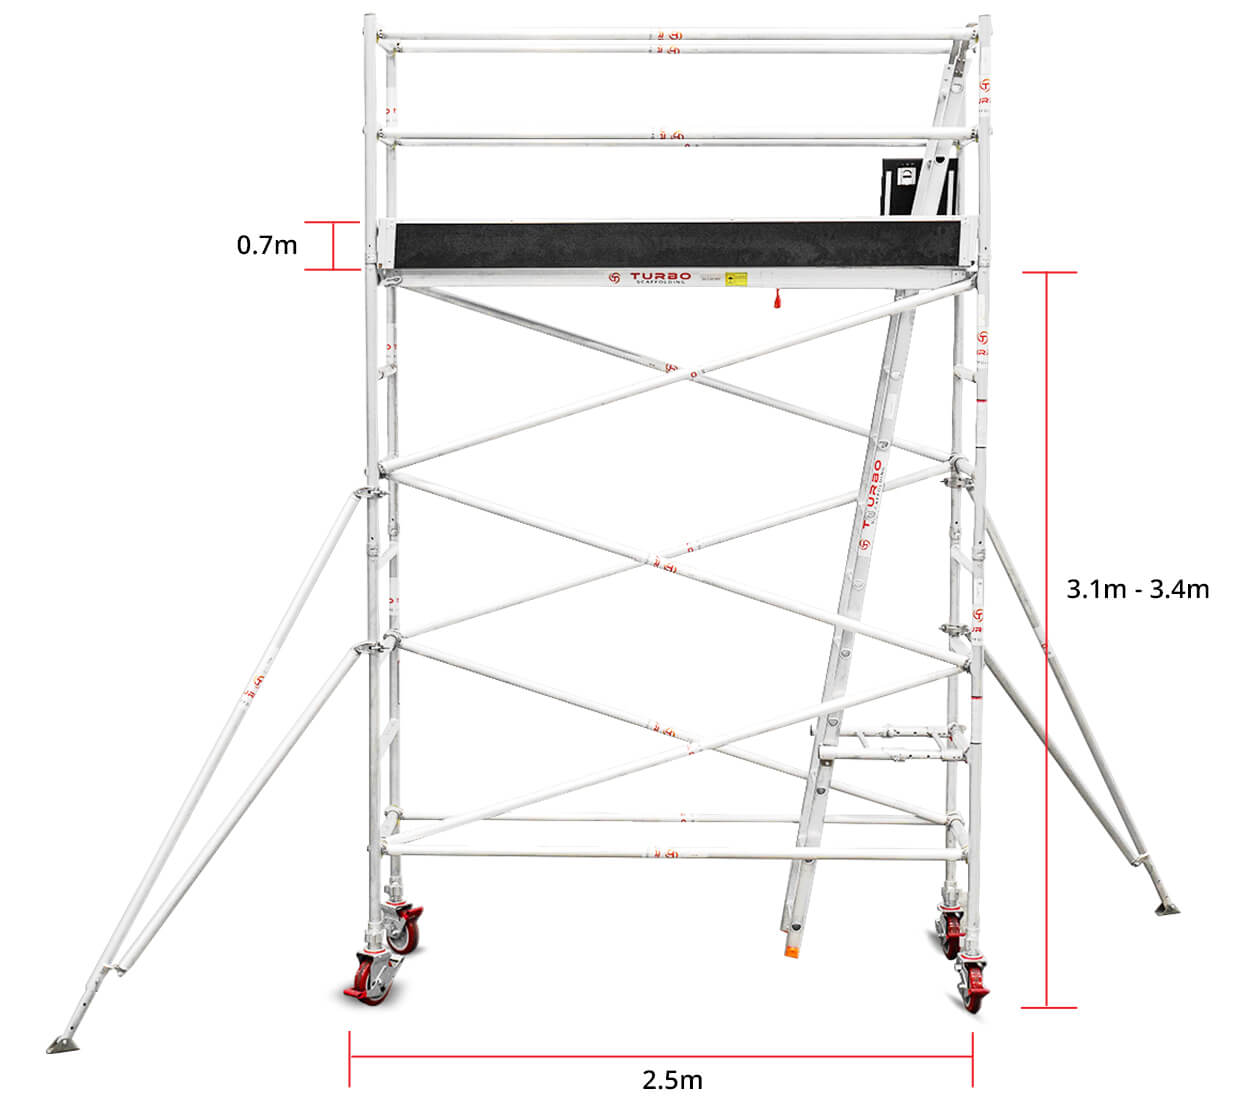 3.1m – 3.4m Narrow Aluminium Mobile Scaffold Tower (Standing Height)